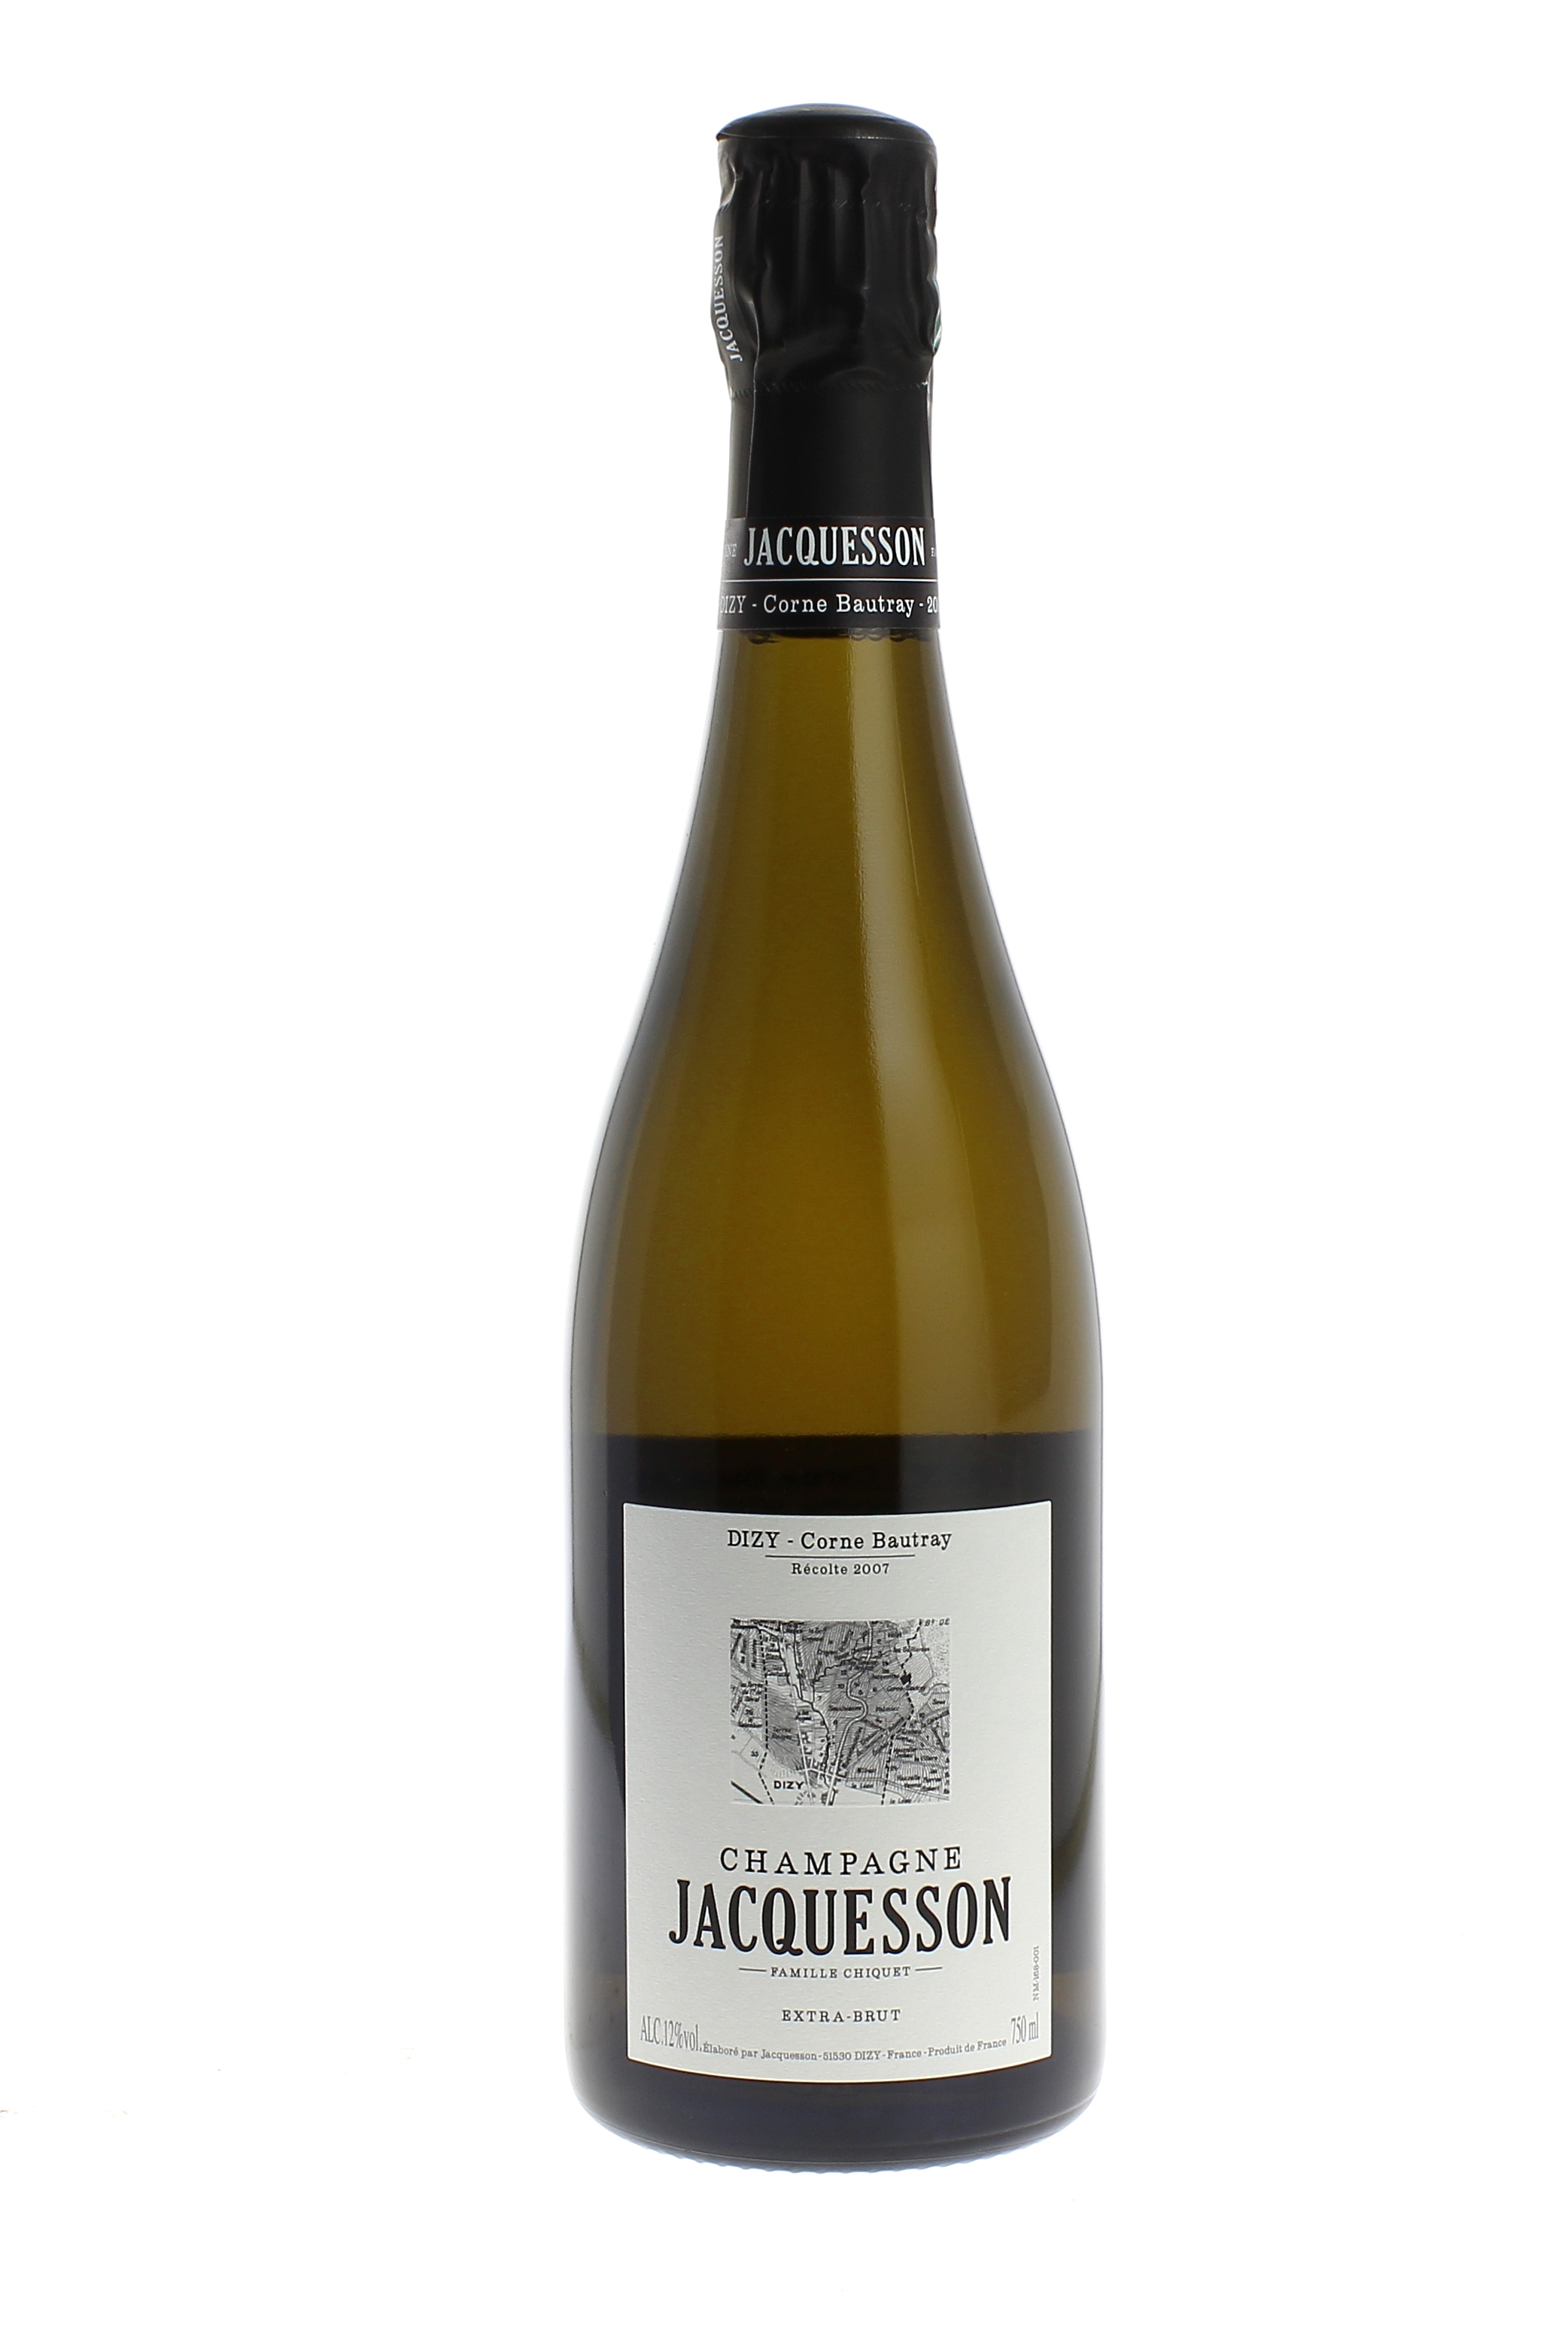 Jacquesson dizy corne bautray 2002  Jacquesson, Champagne